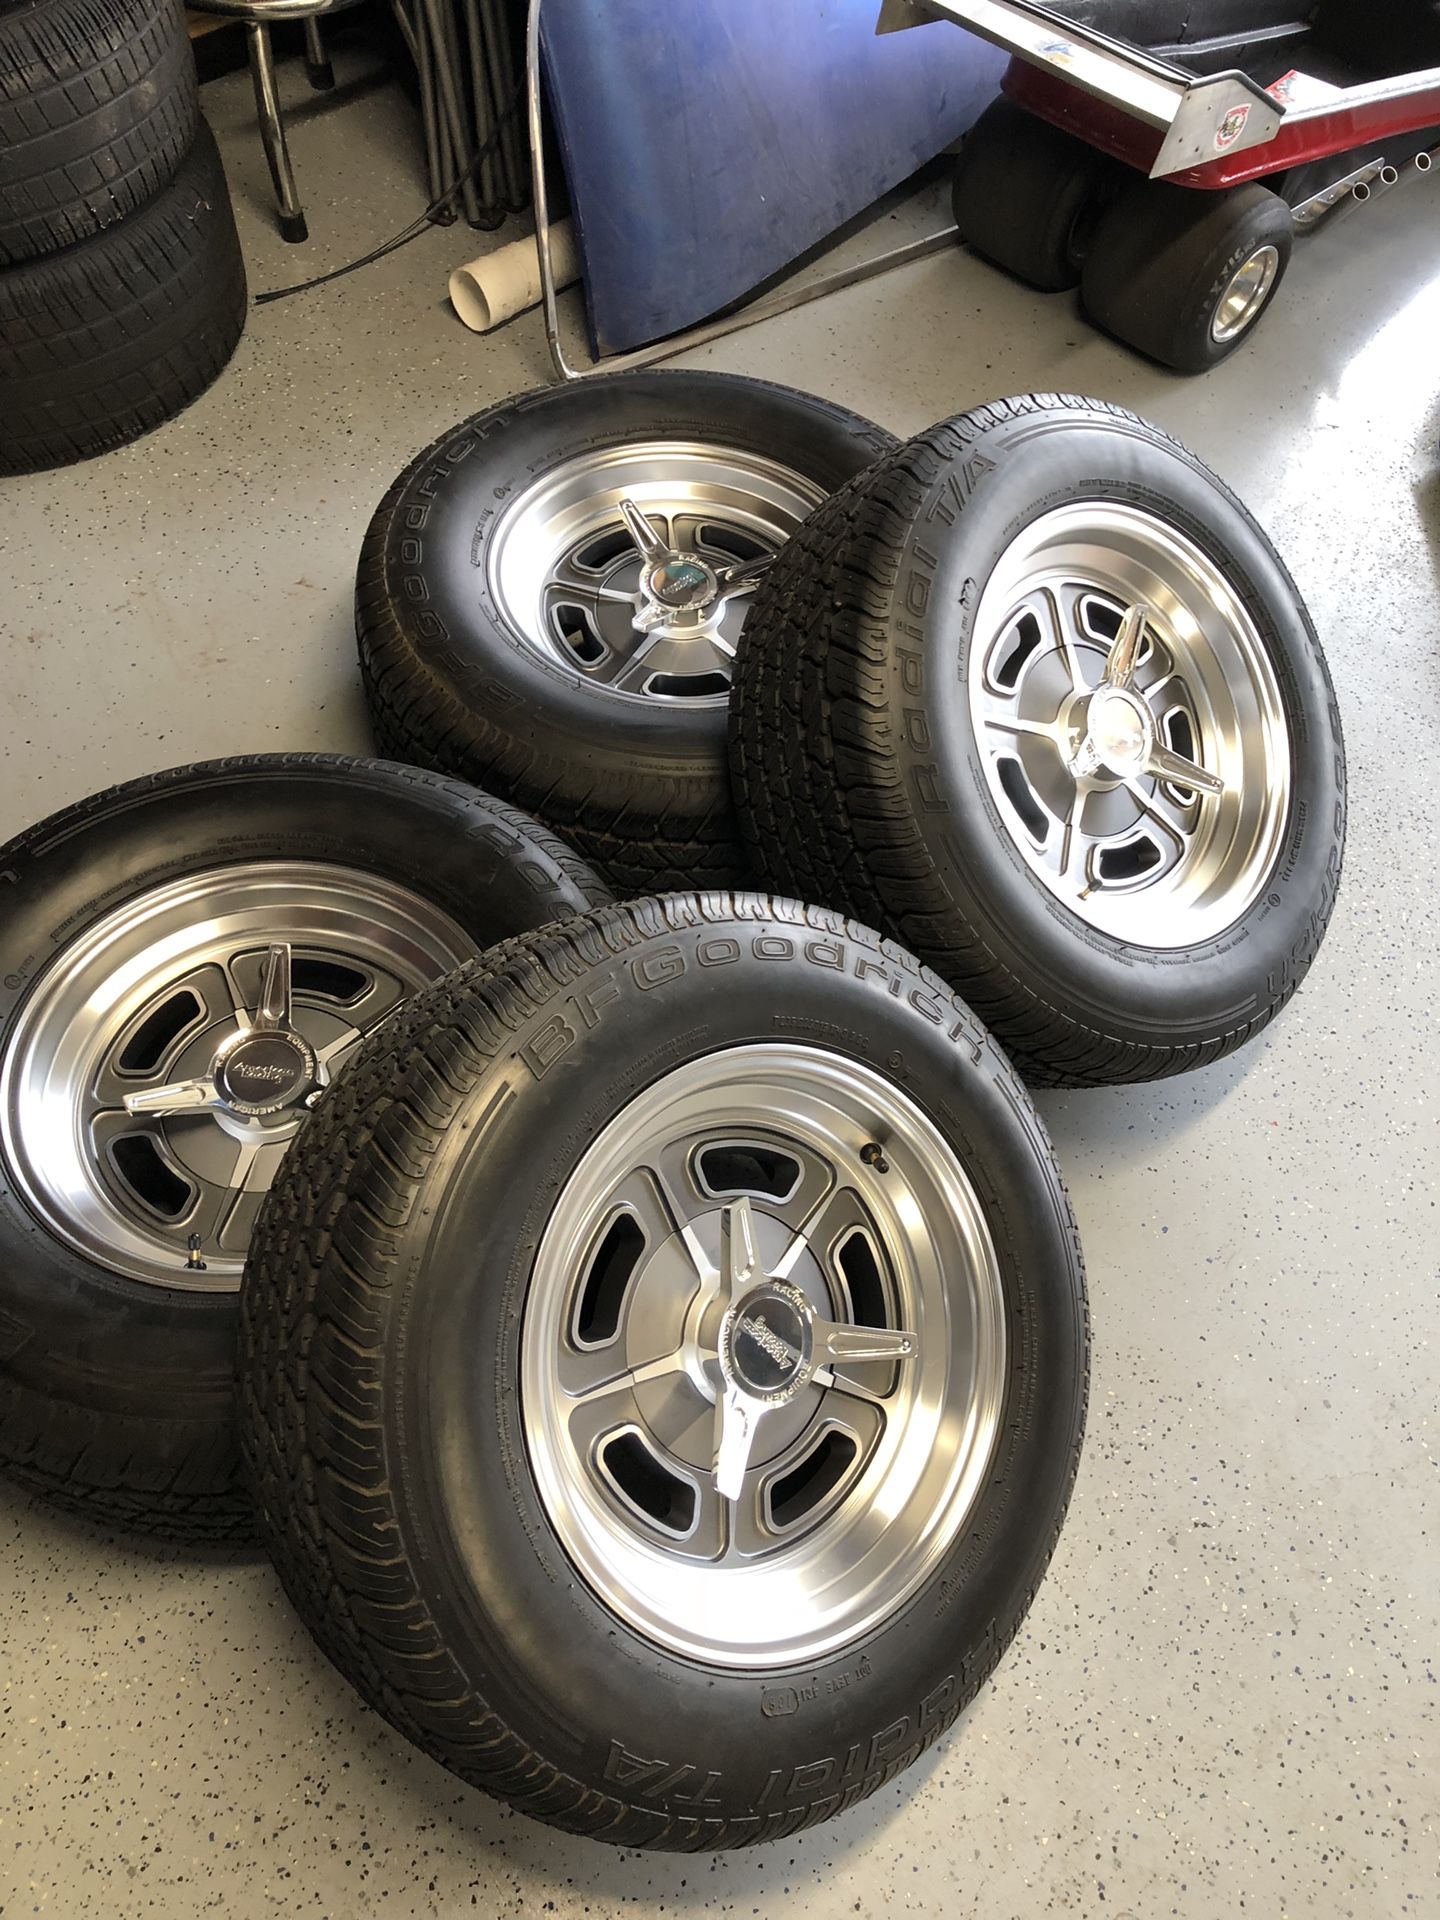 American Racing Salt Flat wheels and BF Goodrich tires